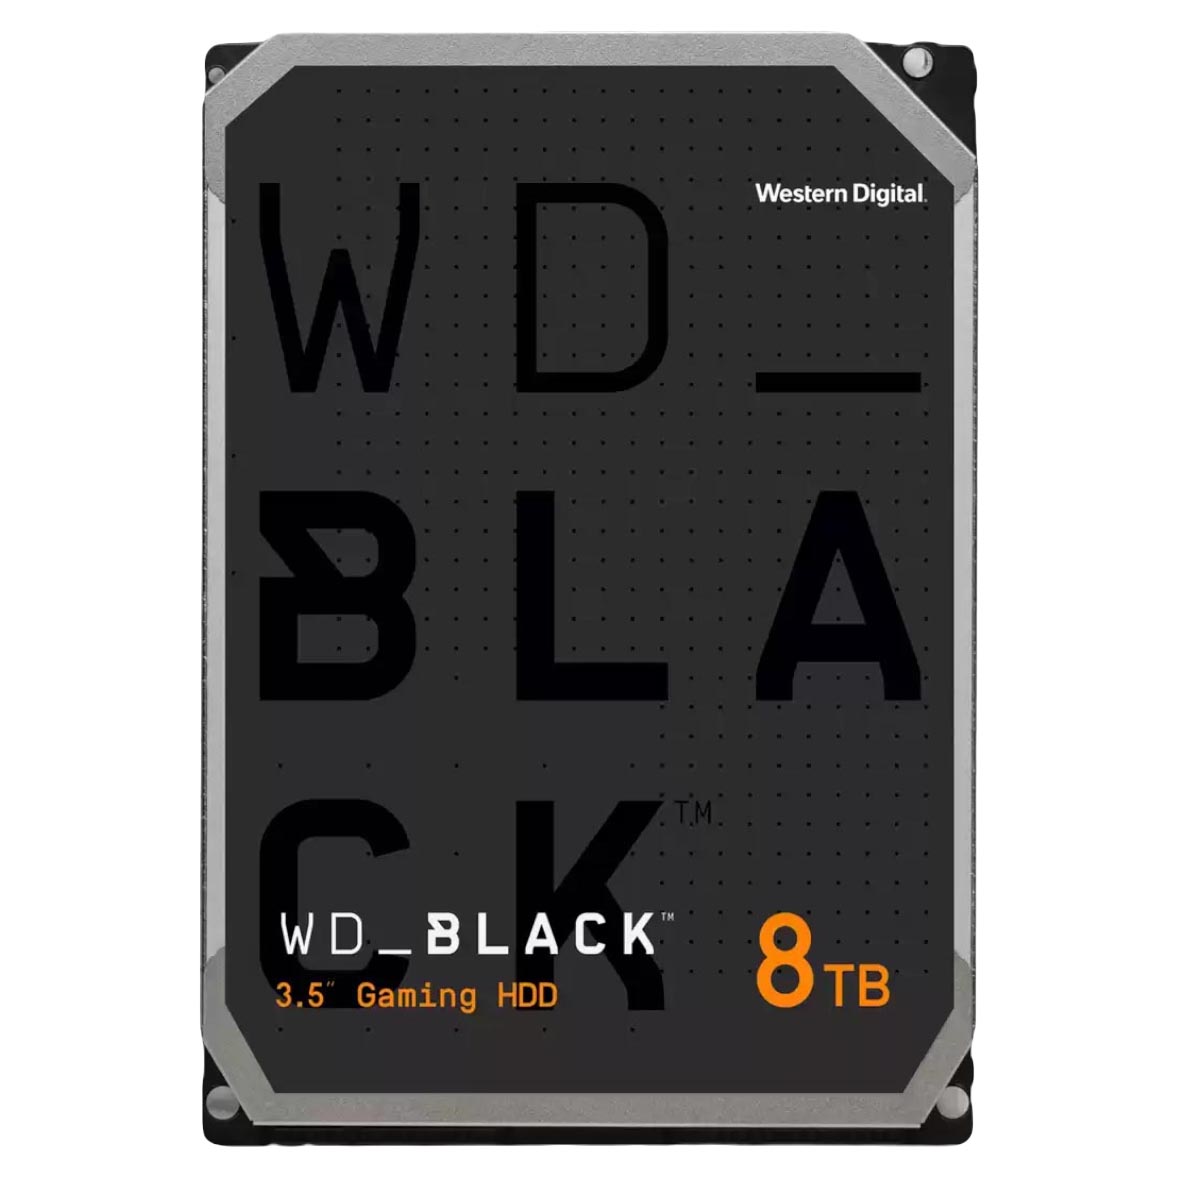 Внутренний жесткий диск Western Digital WD Black Gaming, WD8002FZWX, 8 Тб